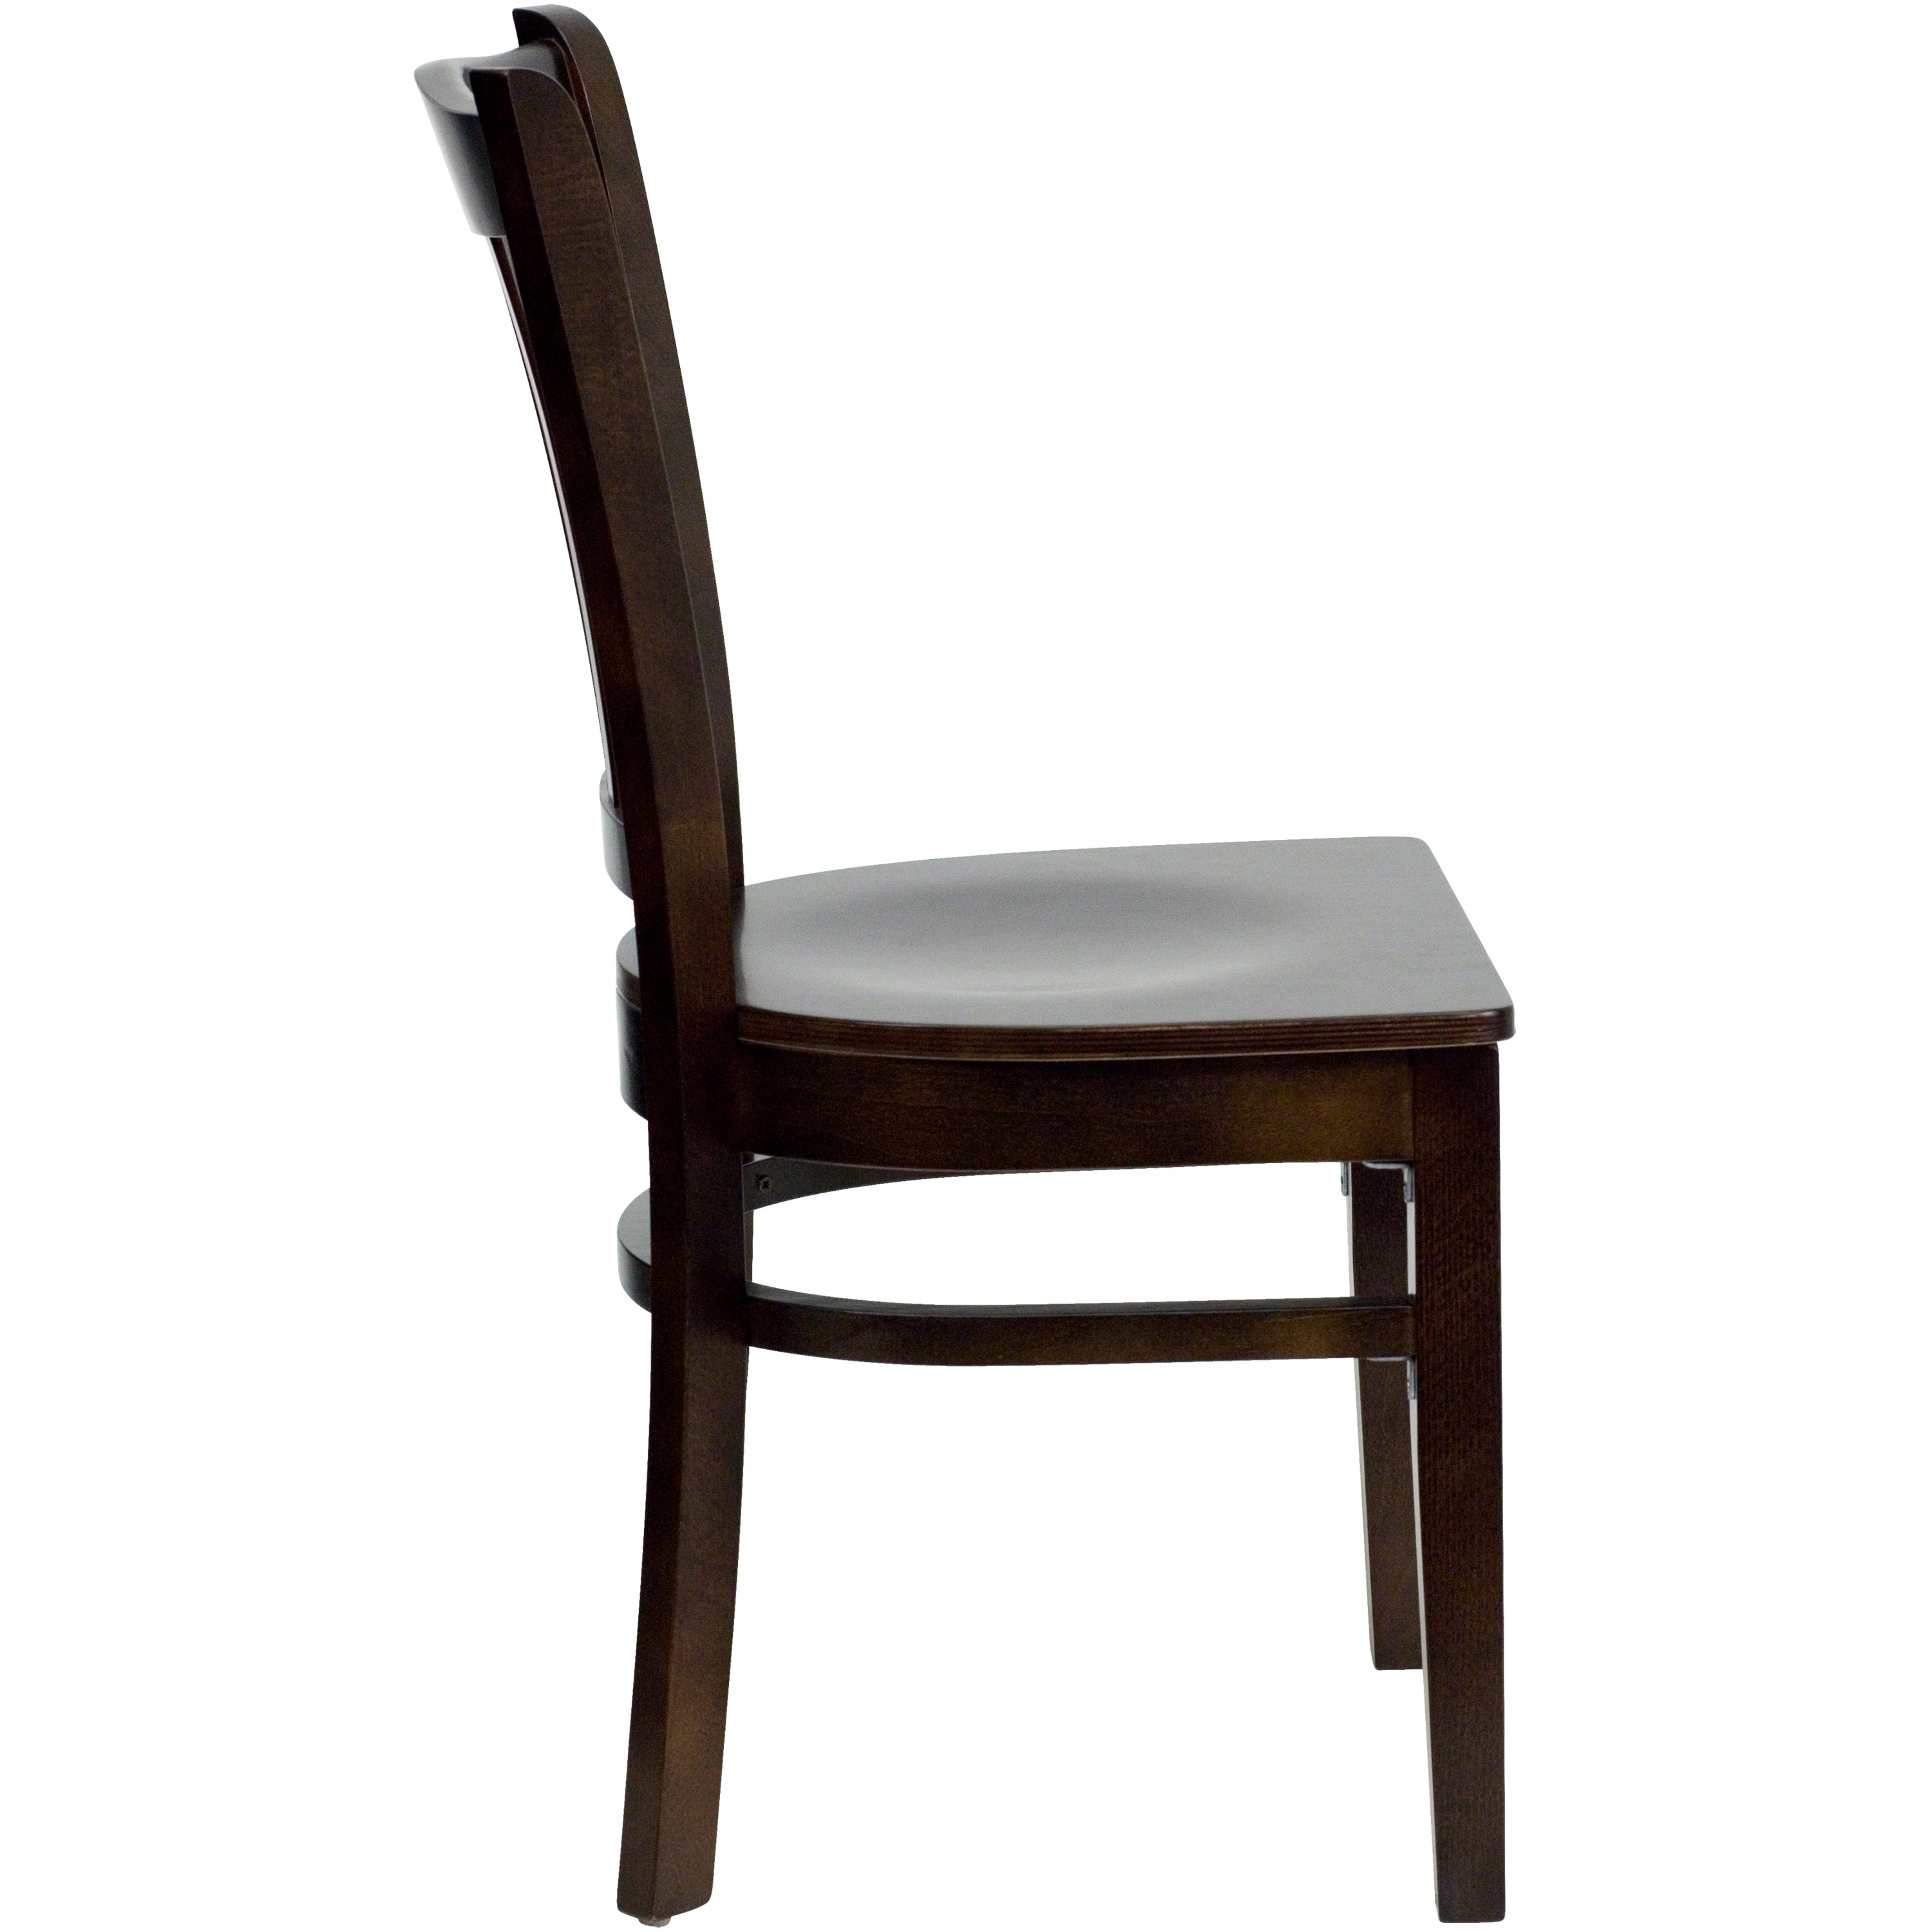 Vertical Slat Back Wooden Restaurant Chair-Restaurant Chair-Flash Furniture-Wall2Wall Furnishings